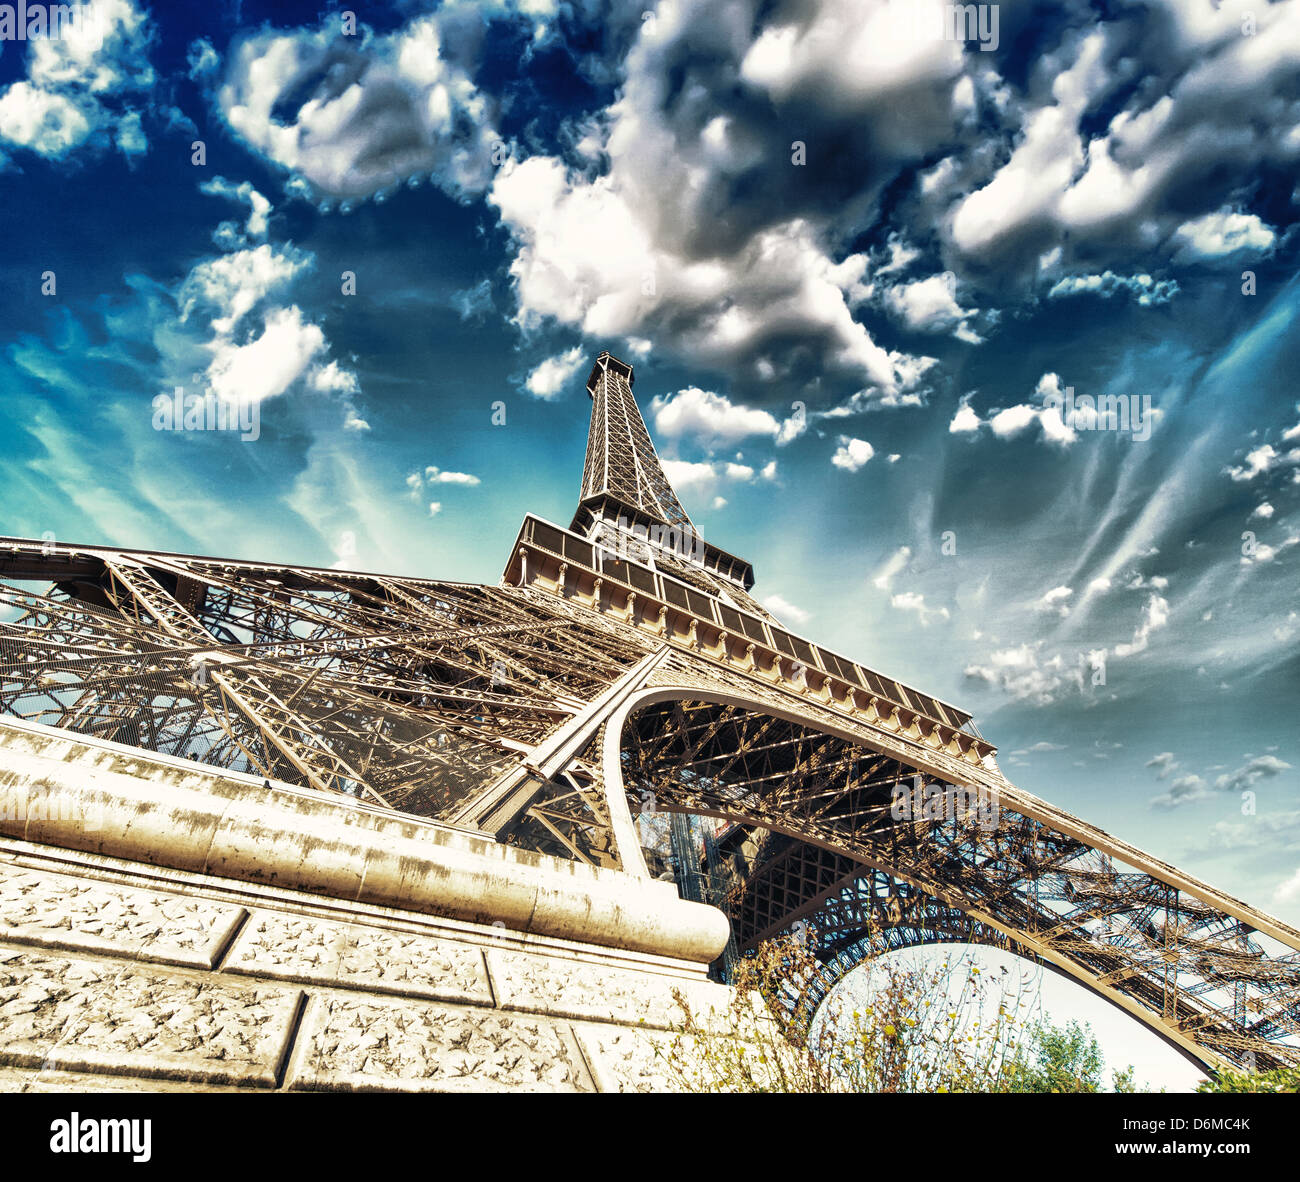 Paris. Gorgeous wide angle view of Eiffel Tower in winter season. La Tour Eiffel - France Stock Photo